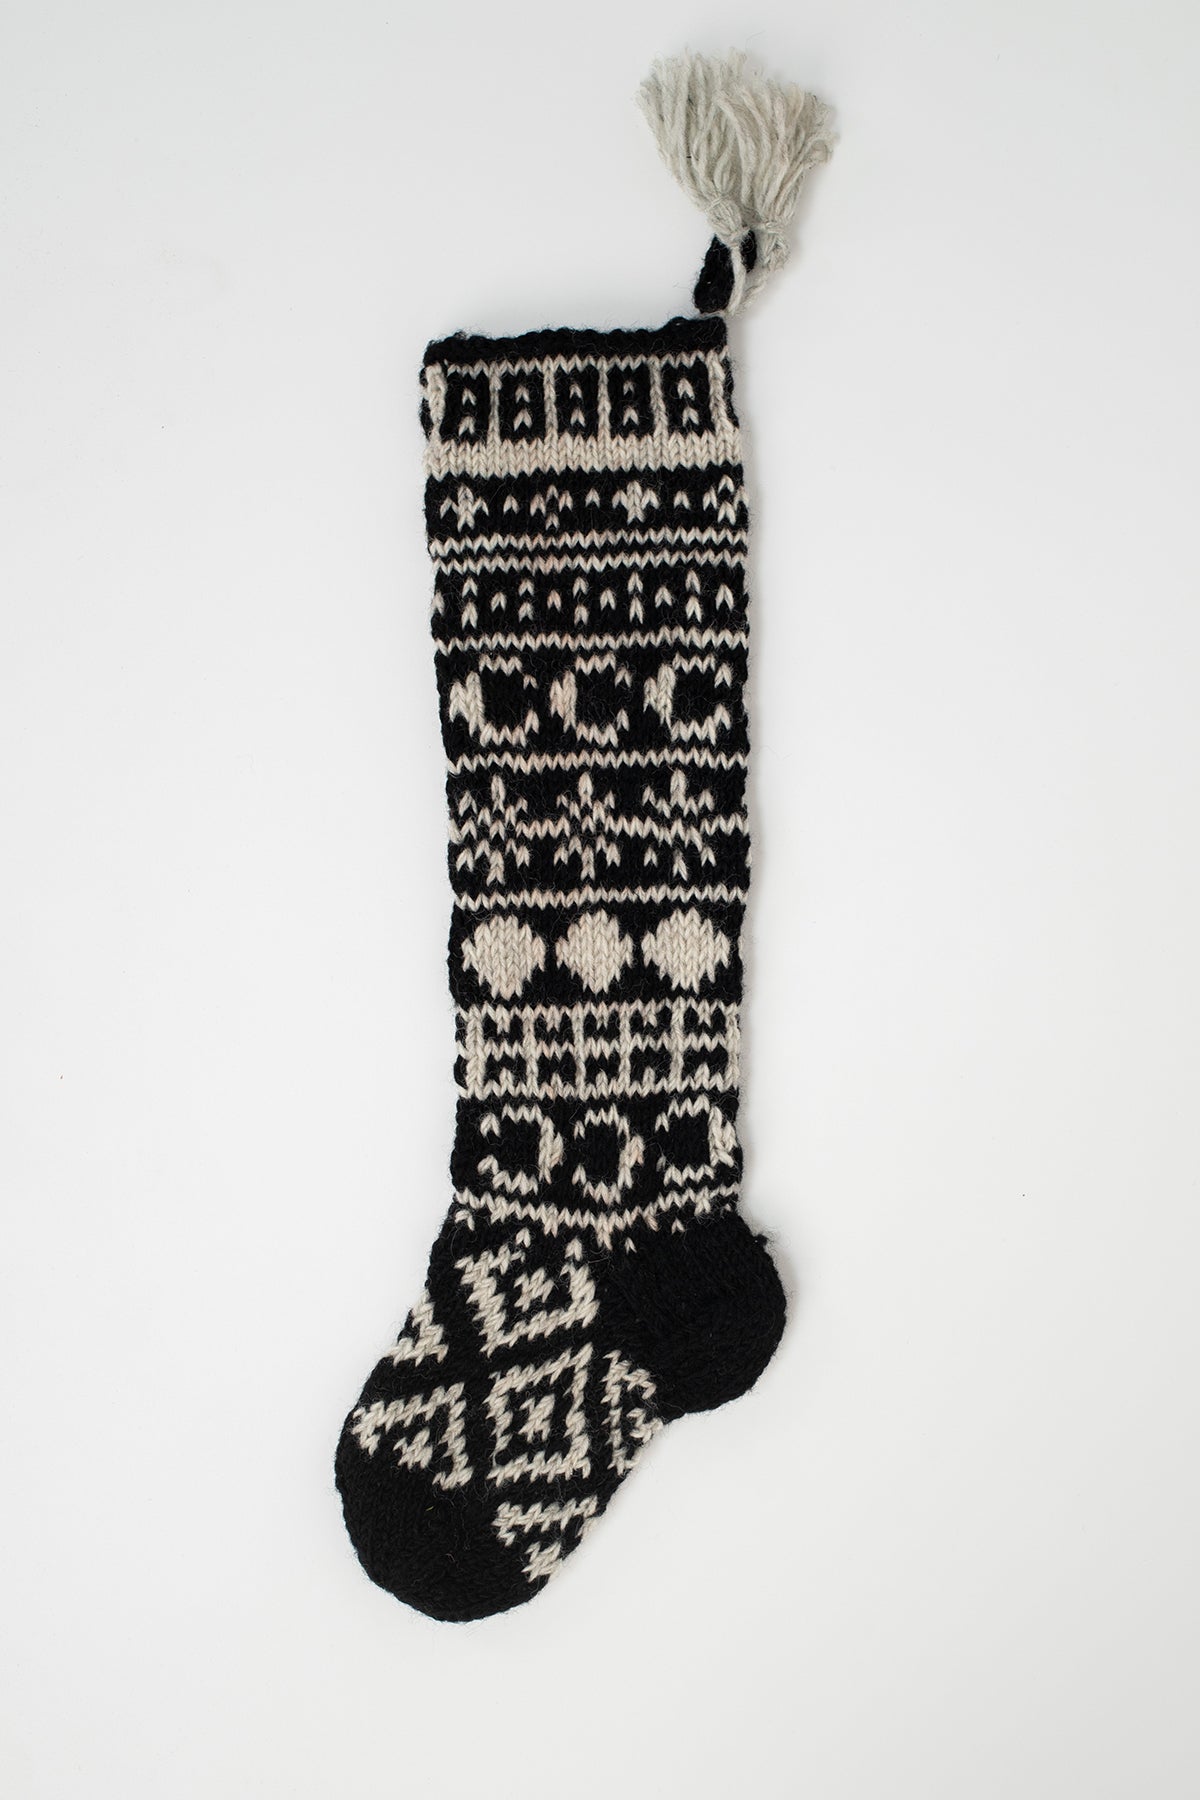 Celestial Hand Knit Stockings